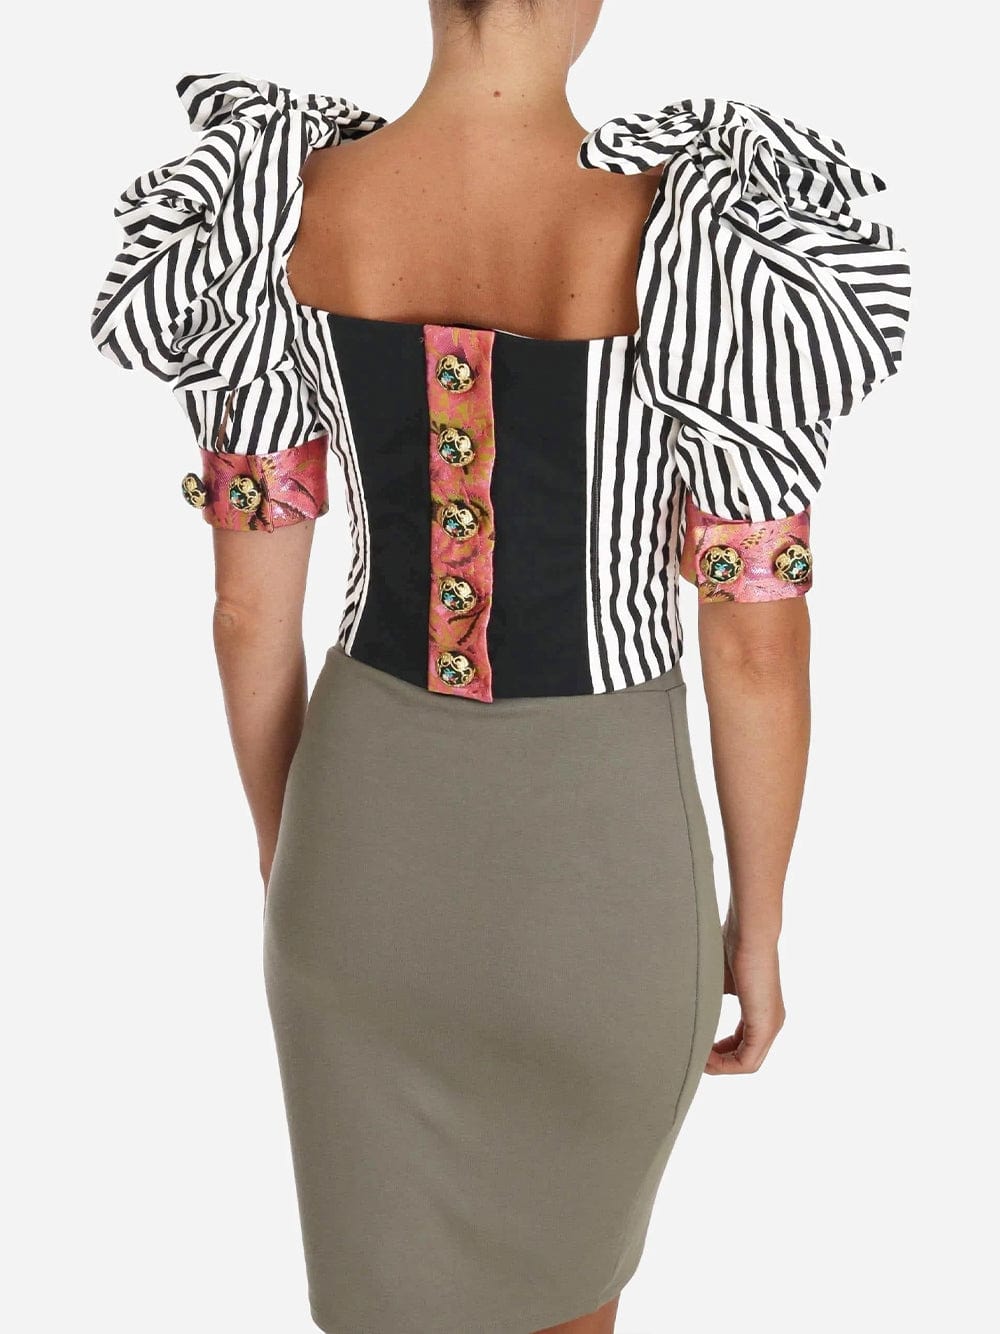 Dolce & Gabbana Striped Cropped Top